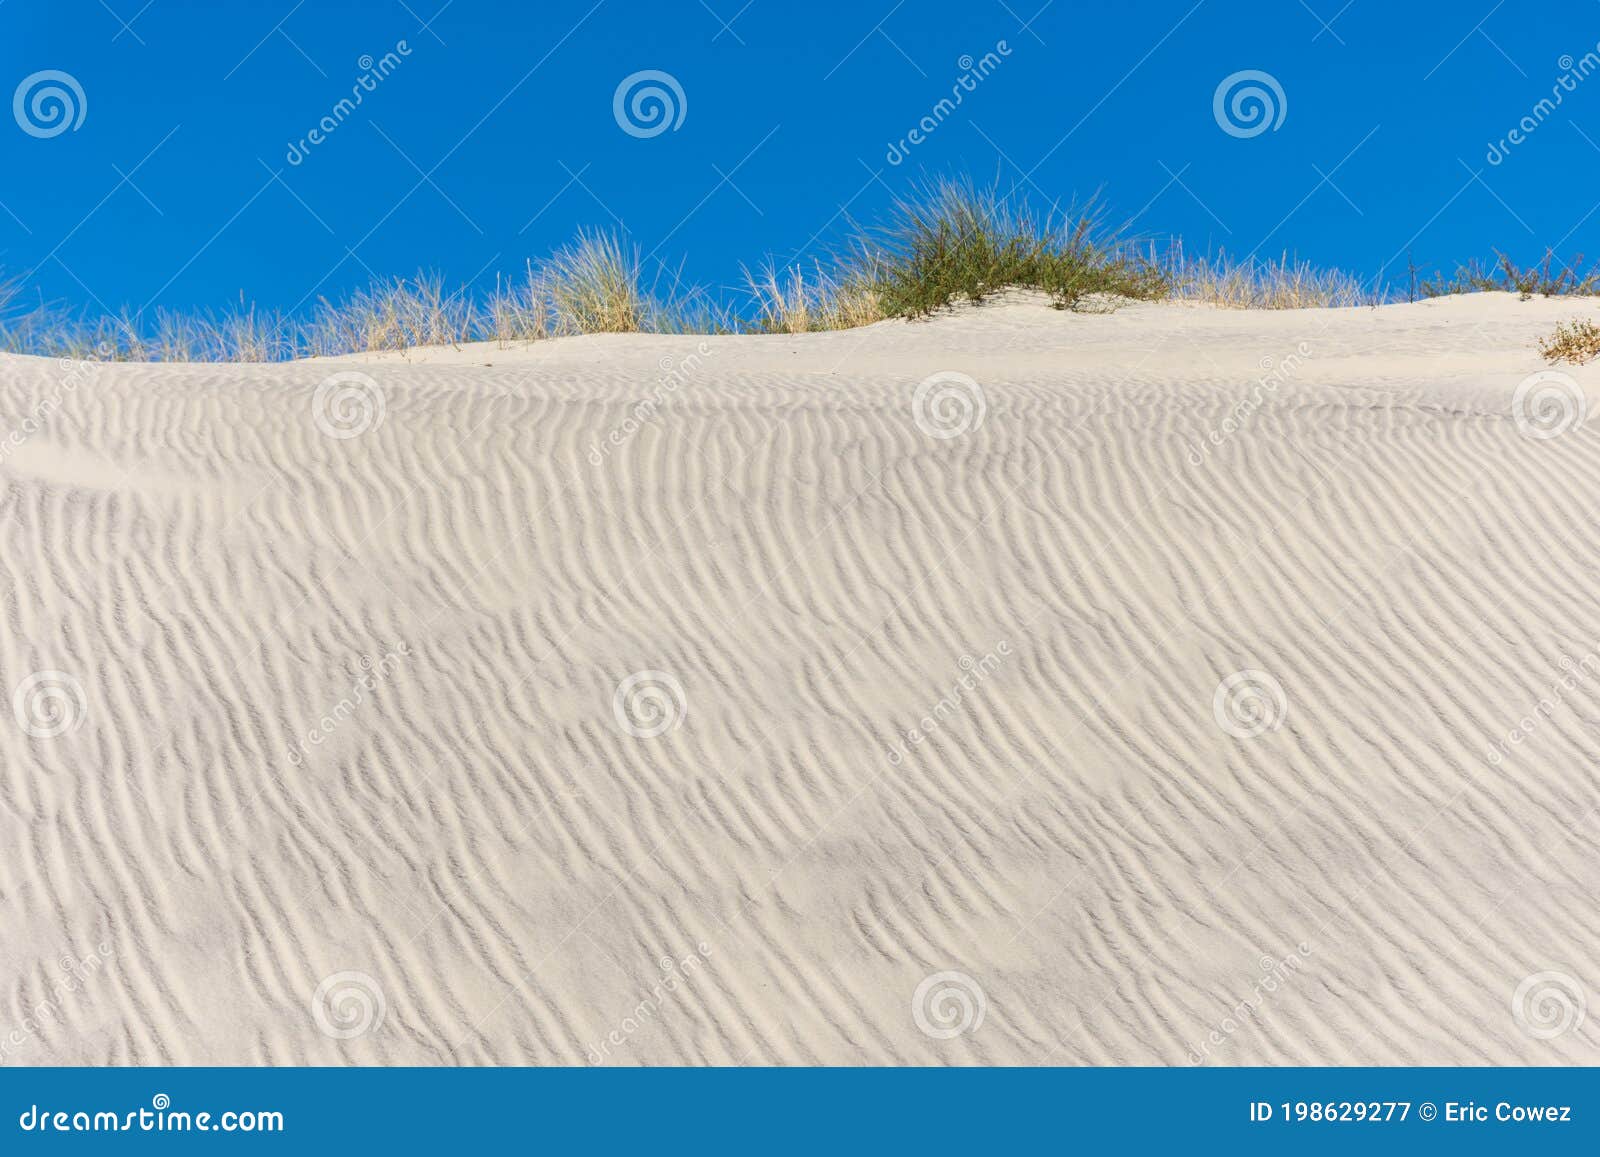 the dunes of biscarrosse, france